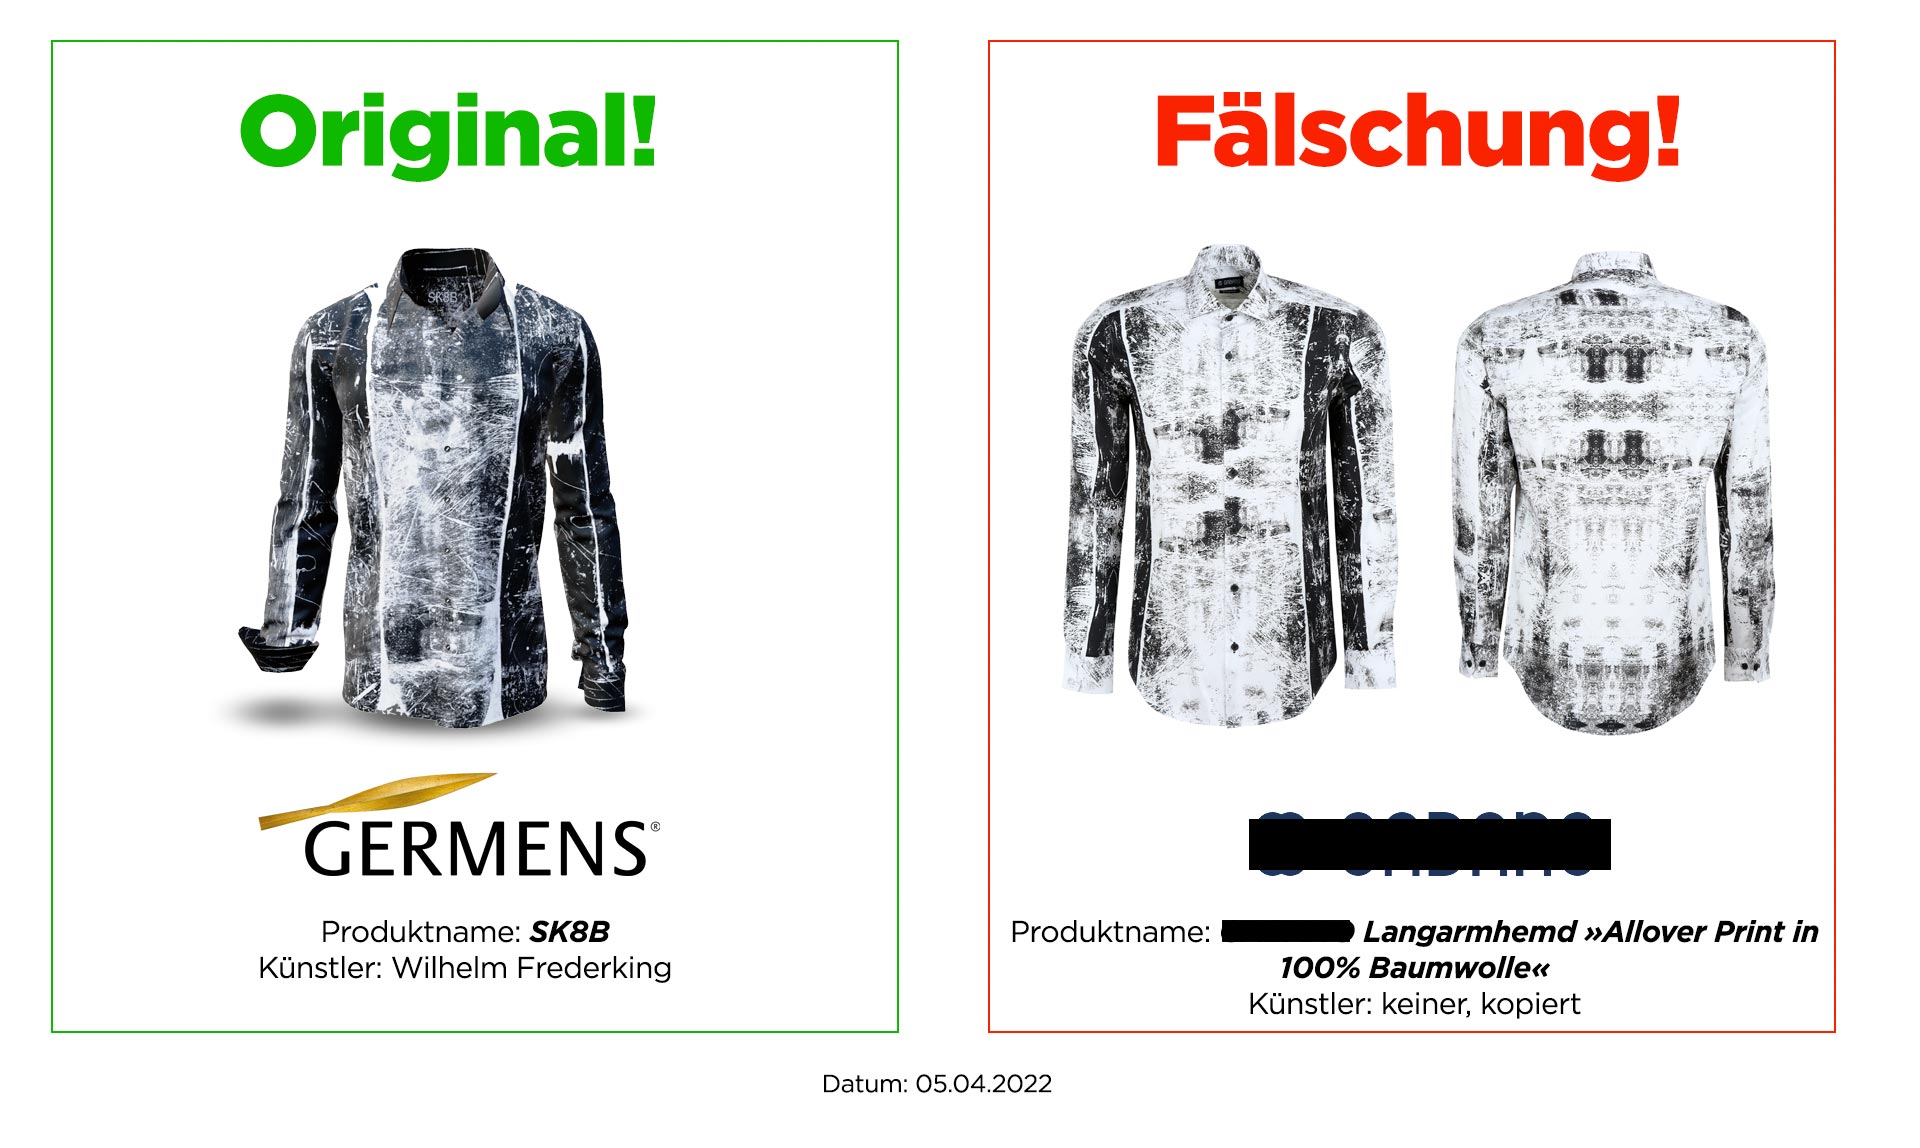 Original GERMENS® Hemd SK8B und Plagiat